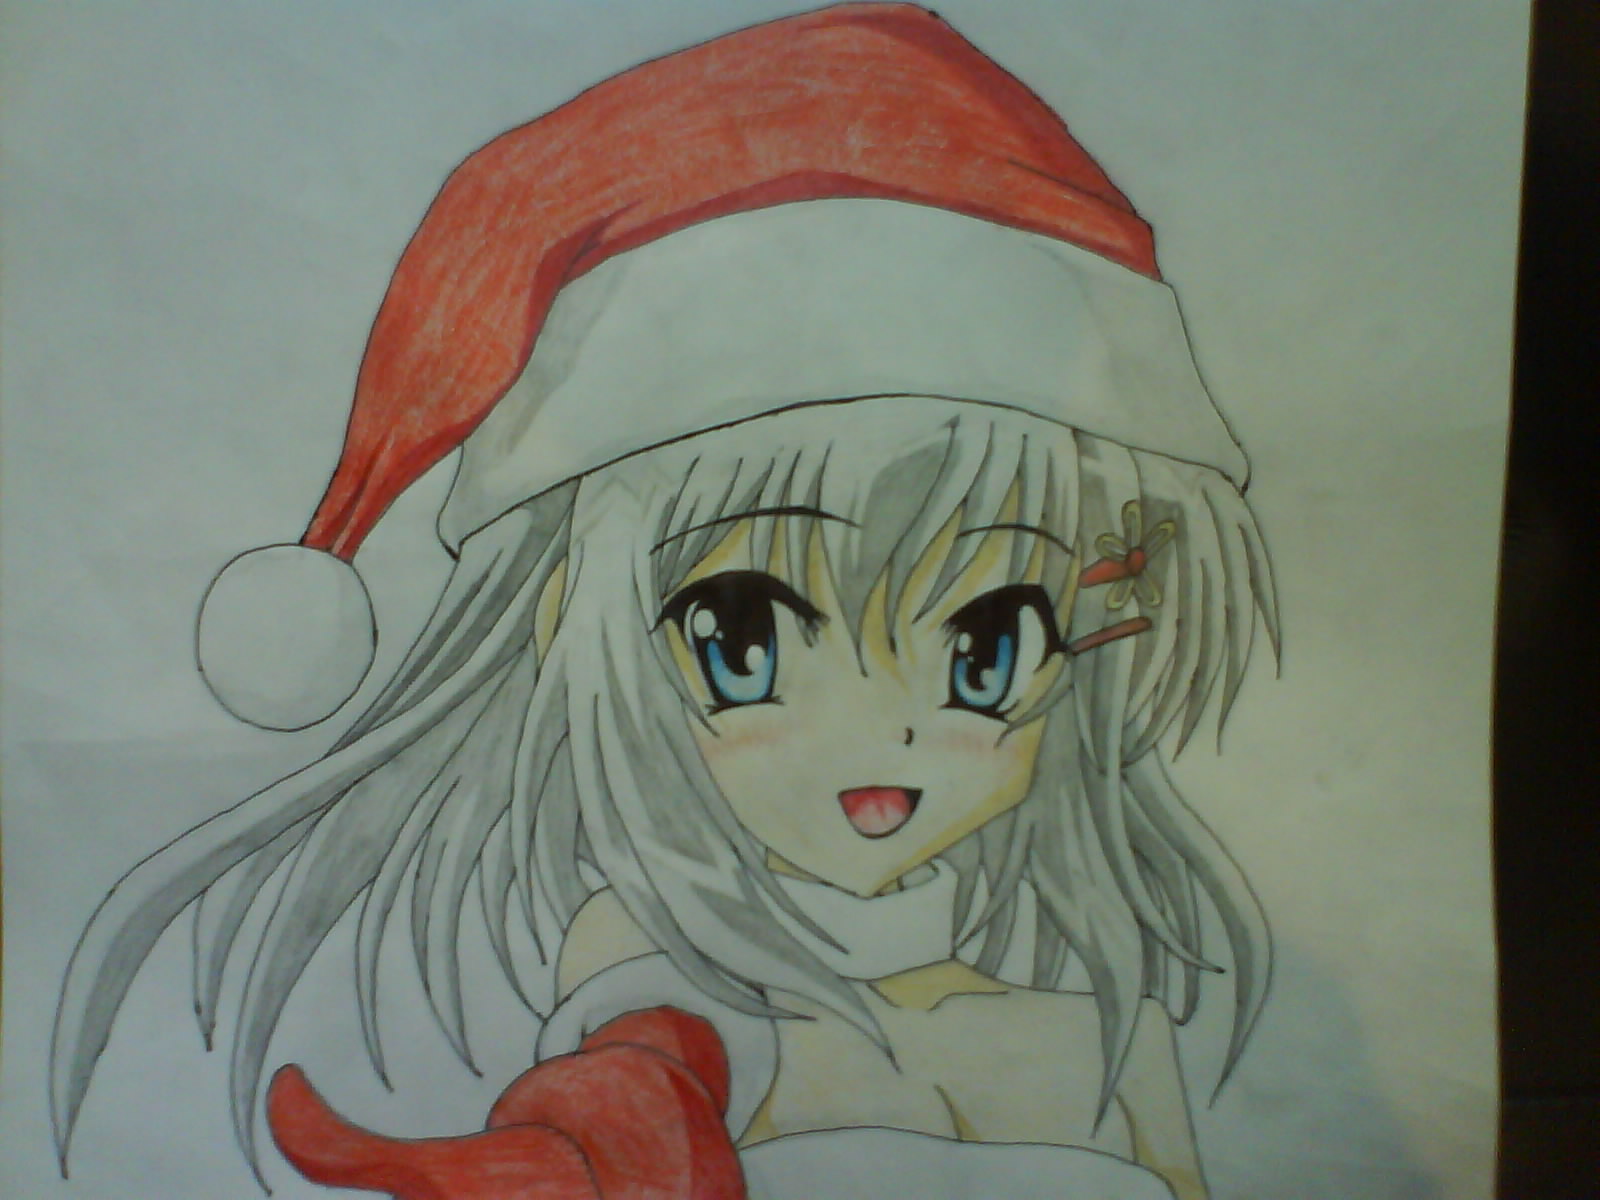 Christmas Manga Girl by DeadlyDrawings on DeviantArt